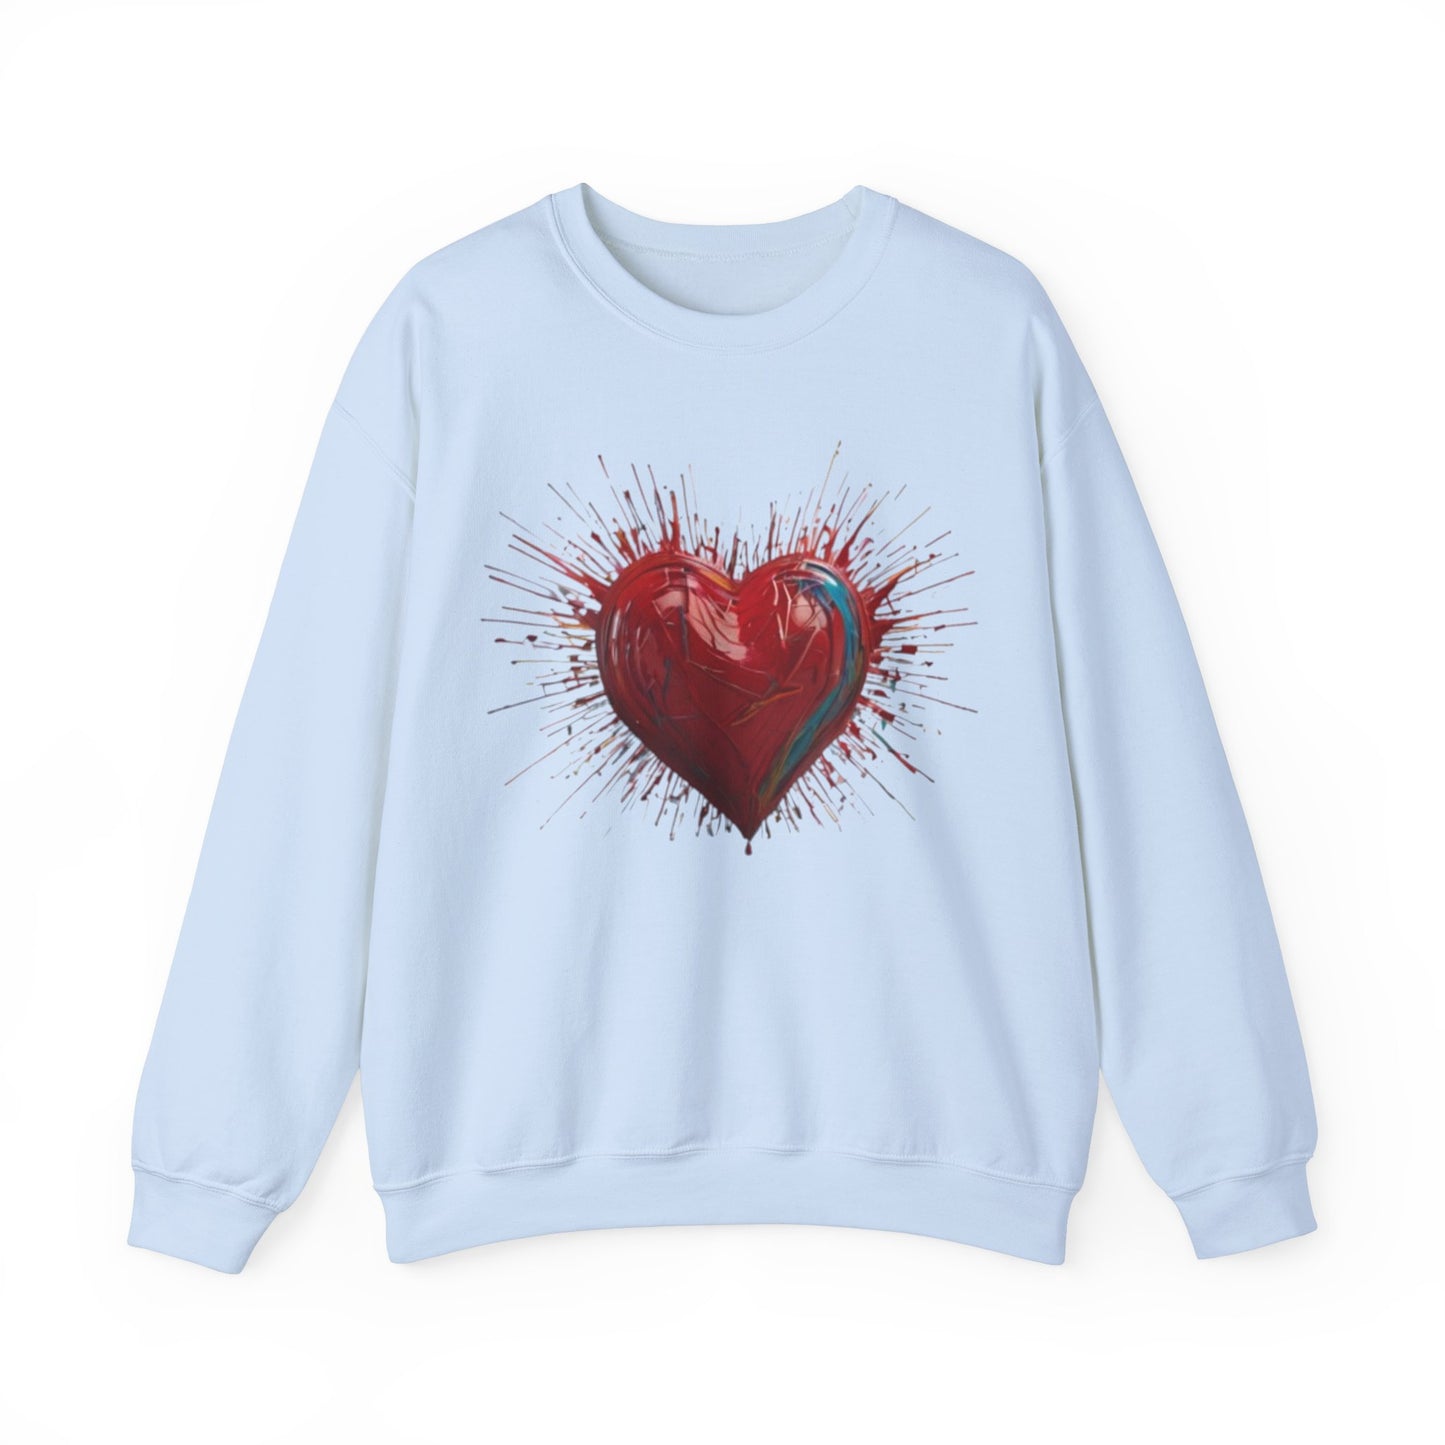 Messy Red Exploding Love Heart - Unisex Crewneck Sweatshirt